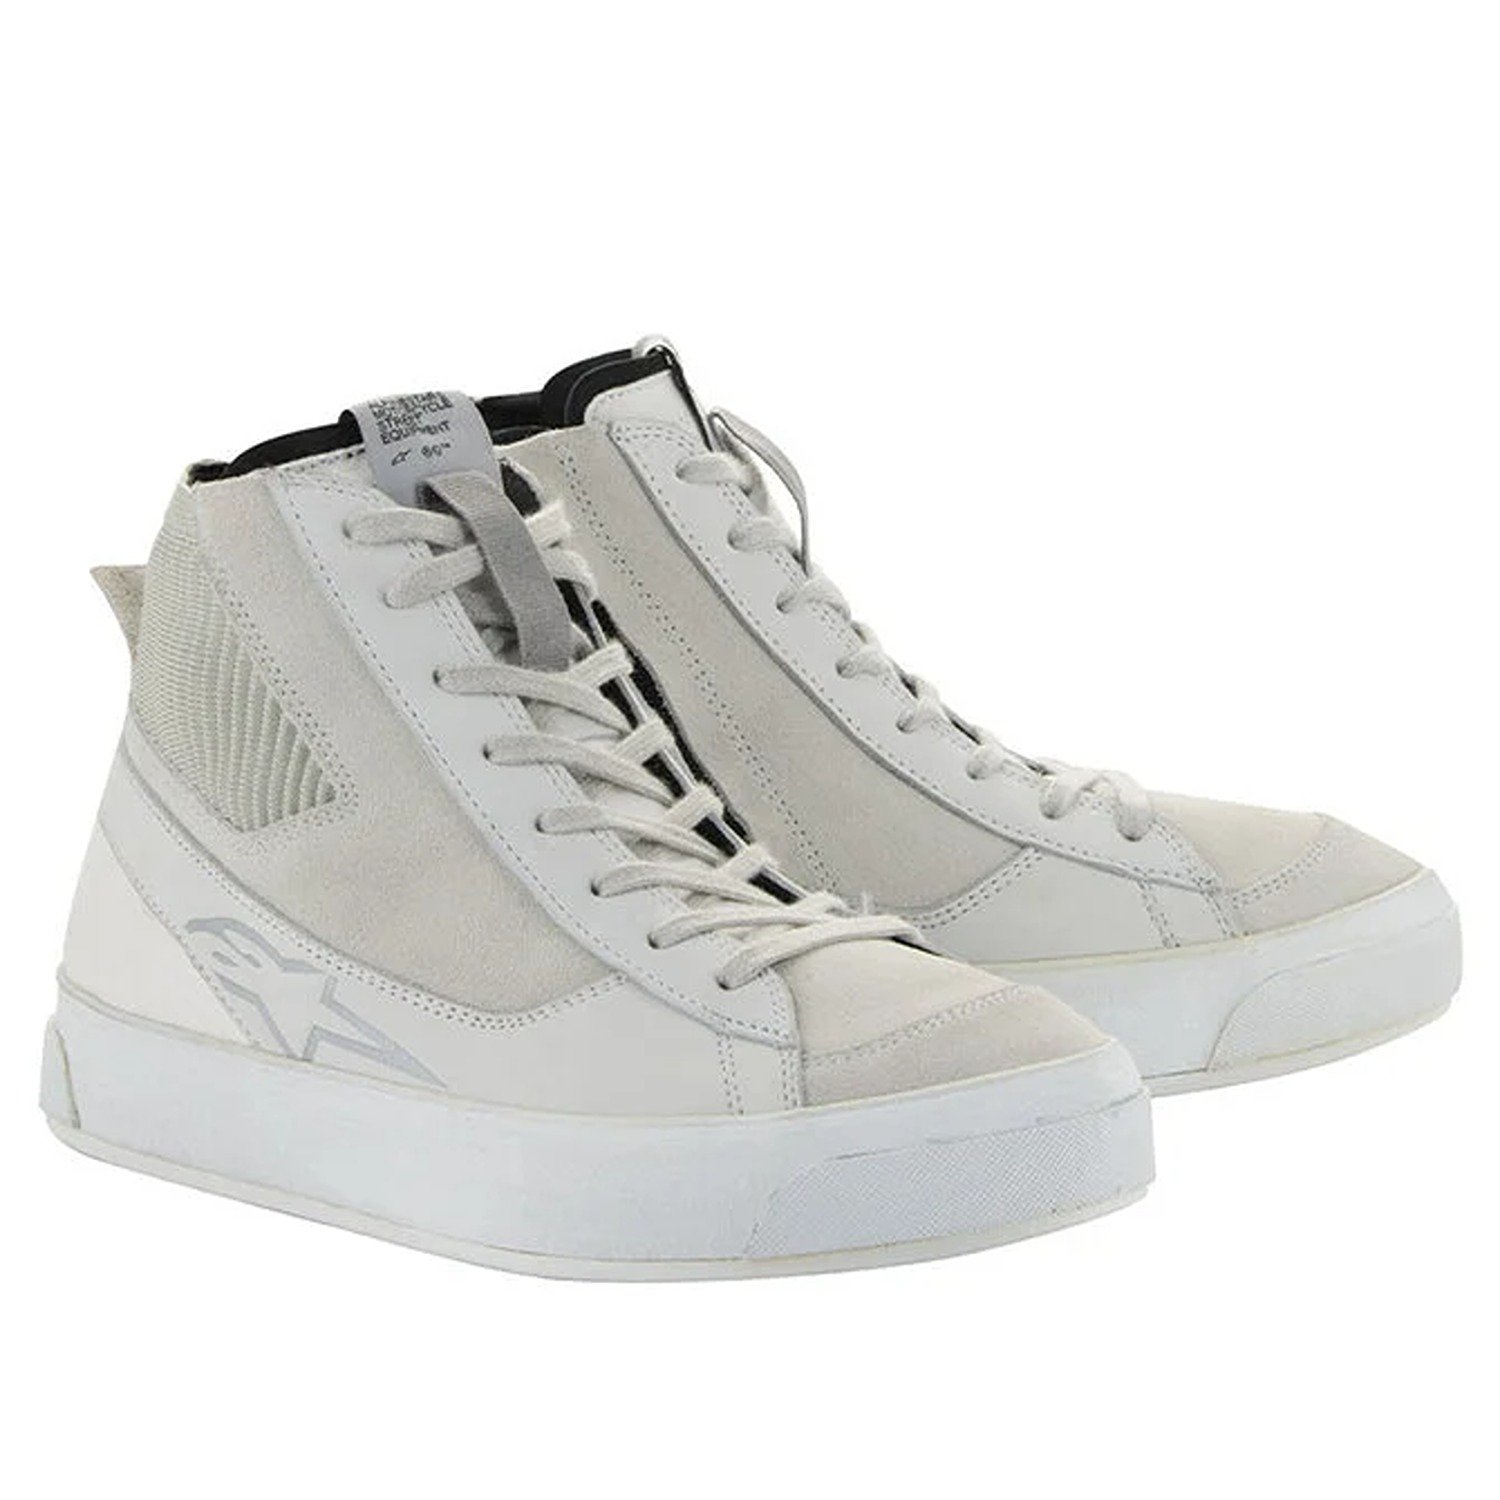 Image of Alpinestars Stella Stated Podium Shoes White Cool Gray Größe US 85